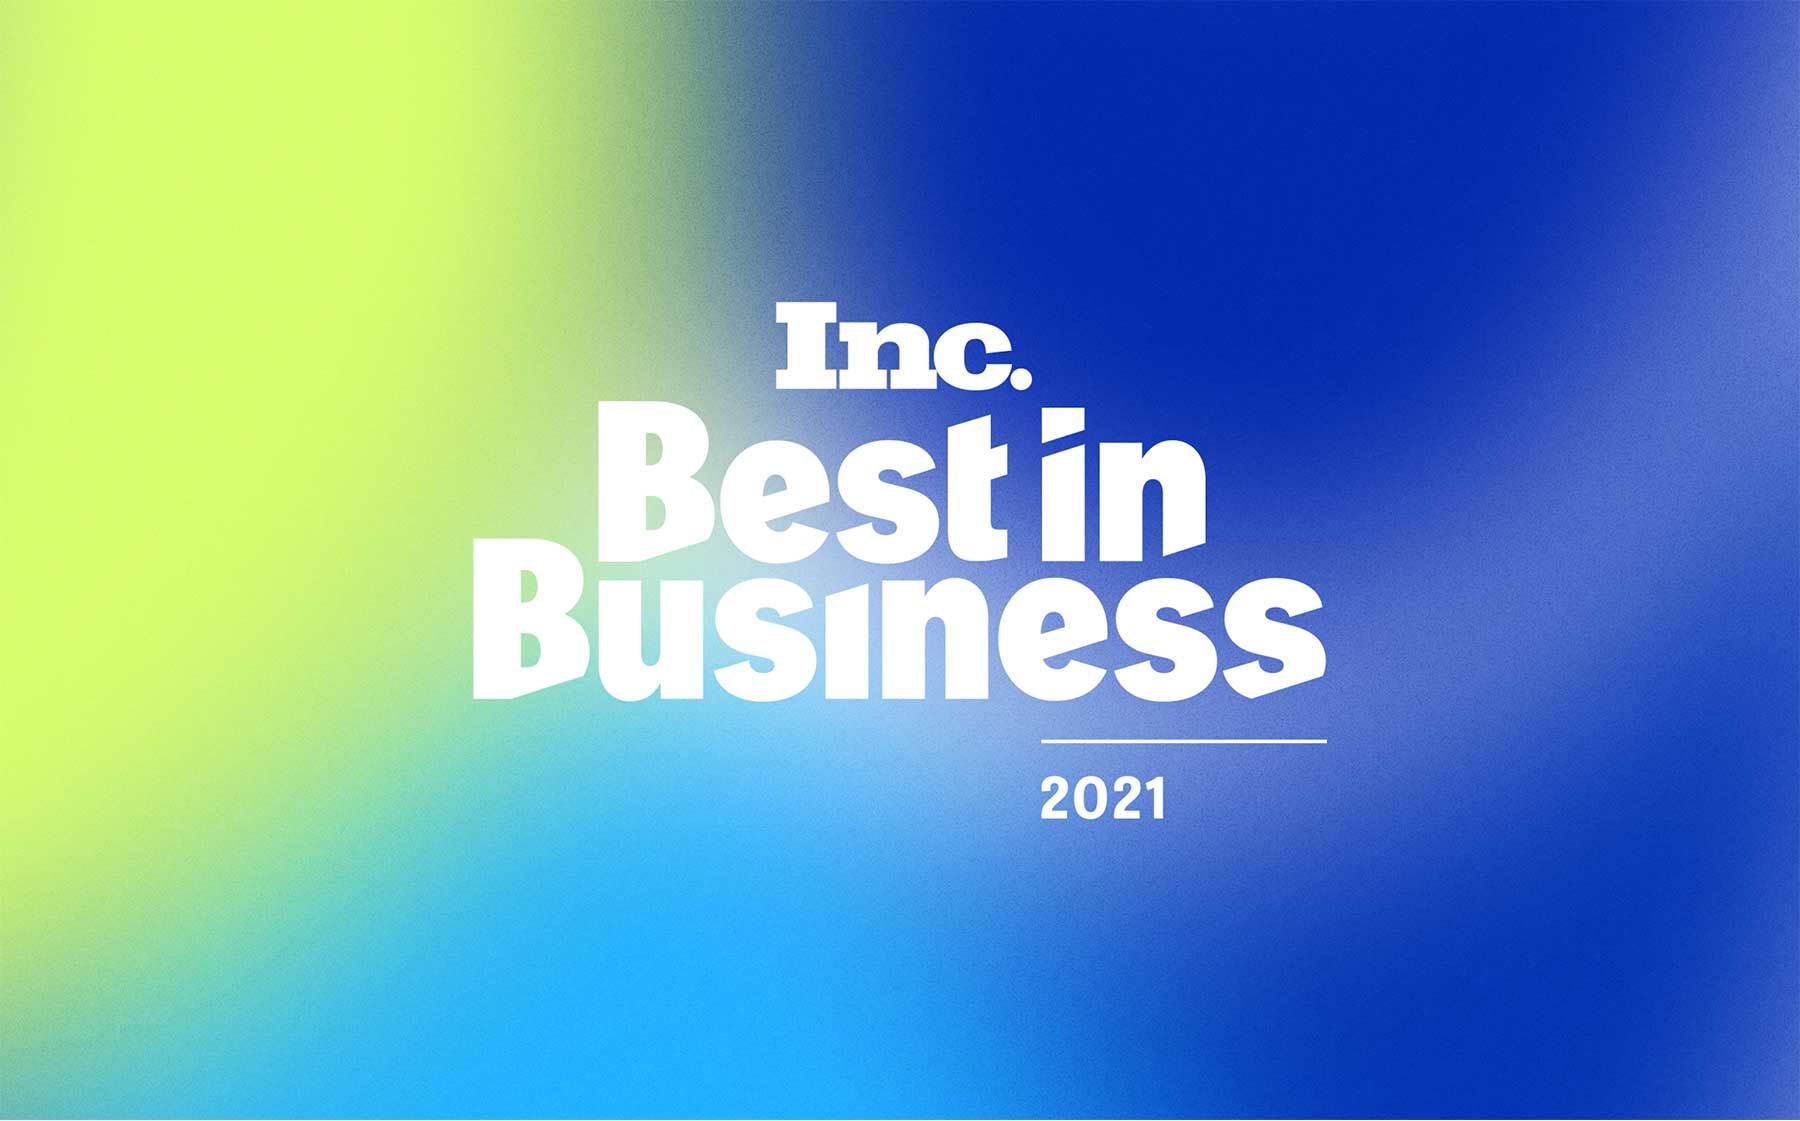 Inc best in business logo